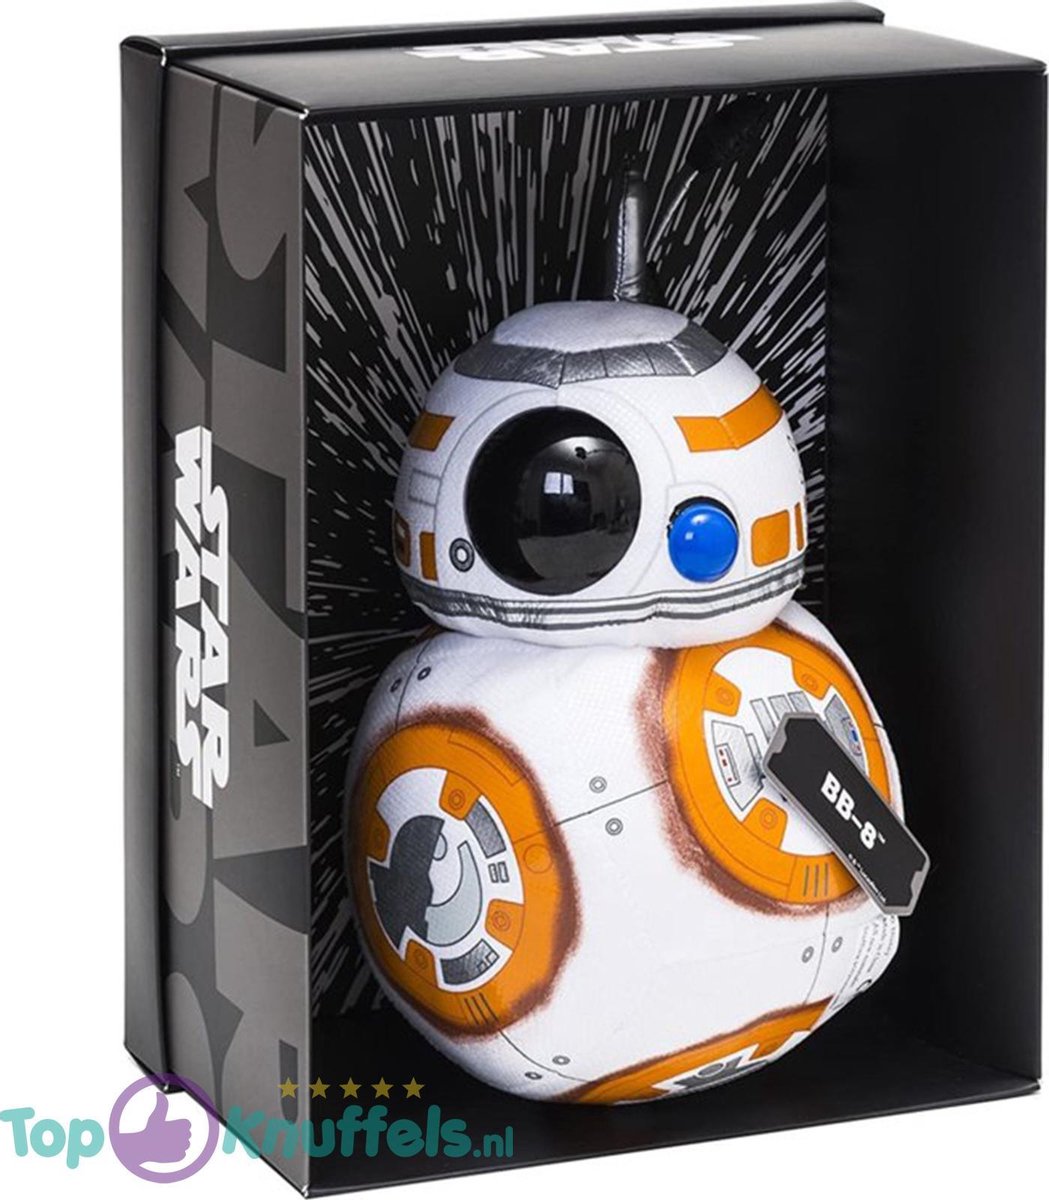 Disney Star Wars Black Line Pluche Knuffel BB-8 25 cm (Incl. Displaydoos) | Star Wars Peluche Plush Toy | Best friend of Yoda, Porg, Han Solo, Boba Fett, Darth Vader | Speelgoed Knuffelpop voor kinderen